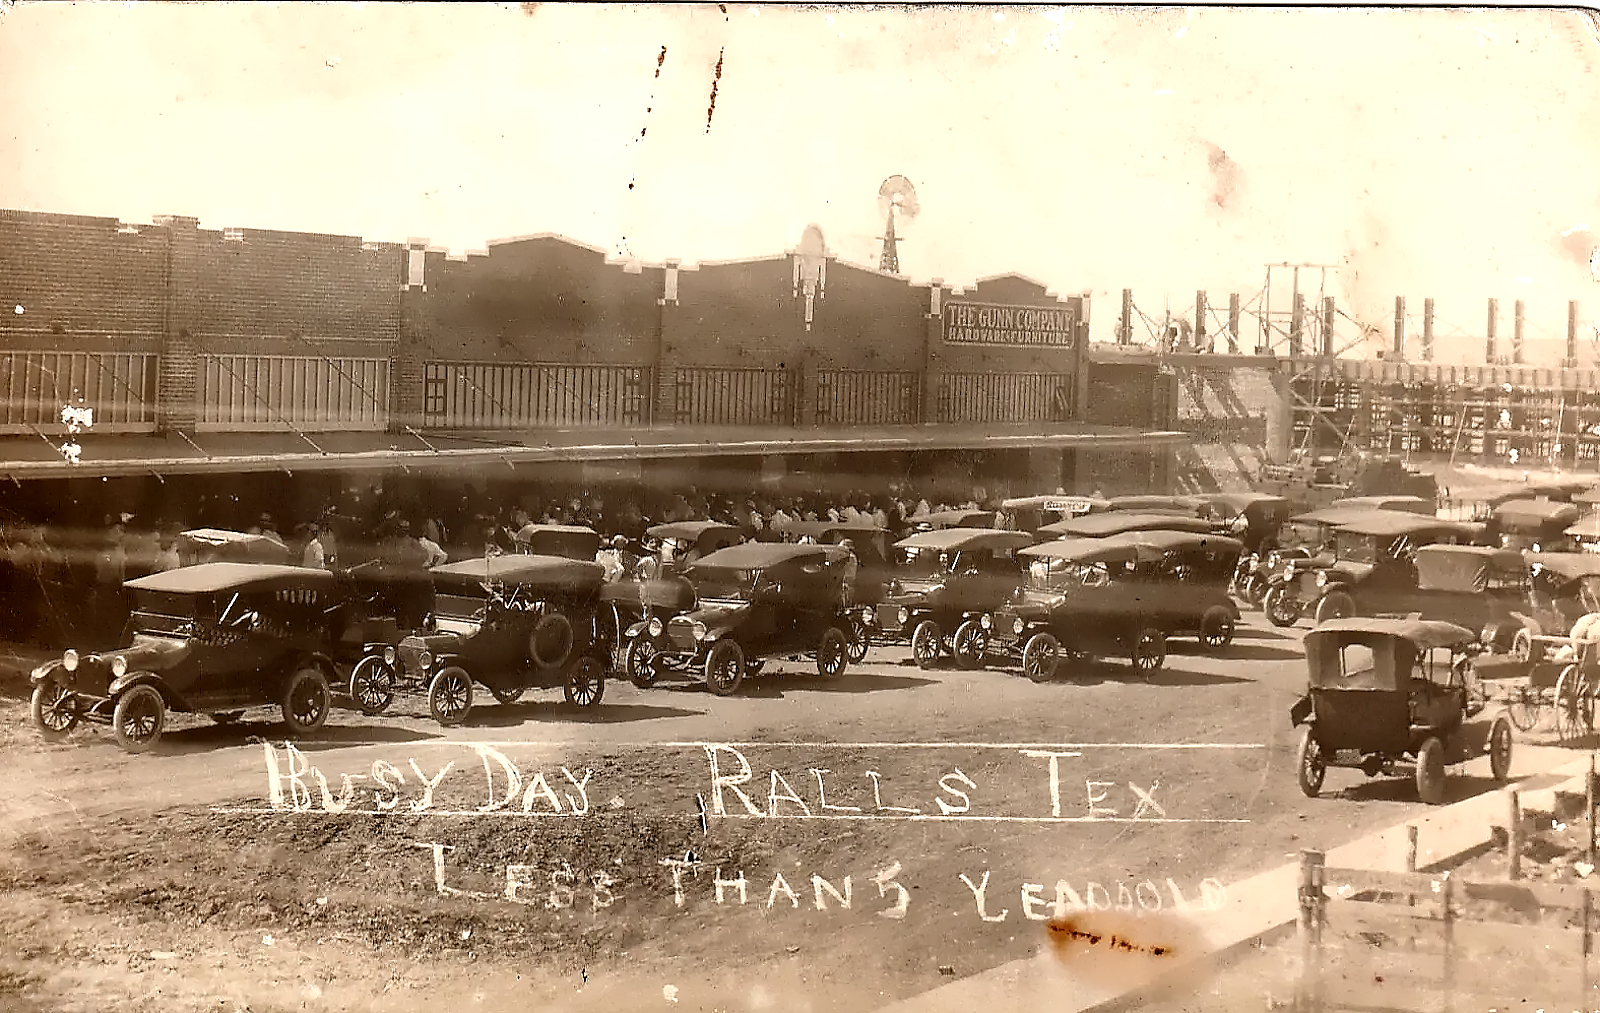 Ralls Texas in 1916